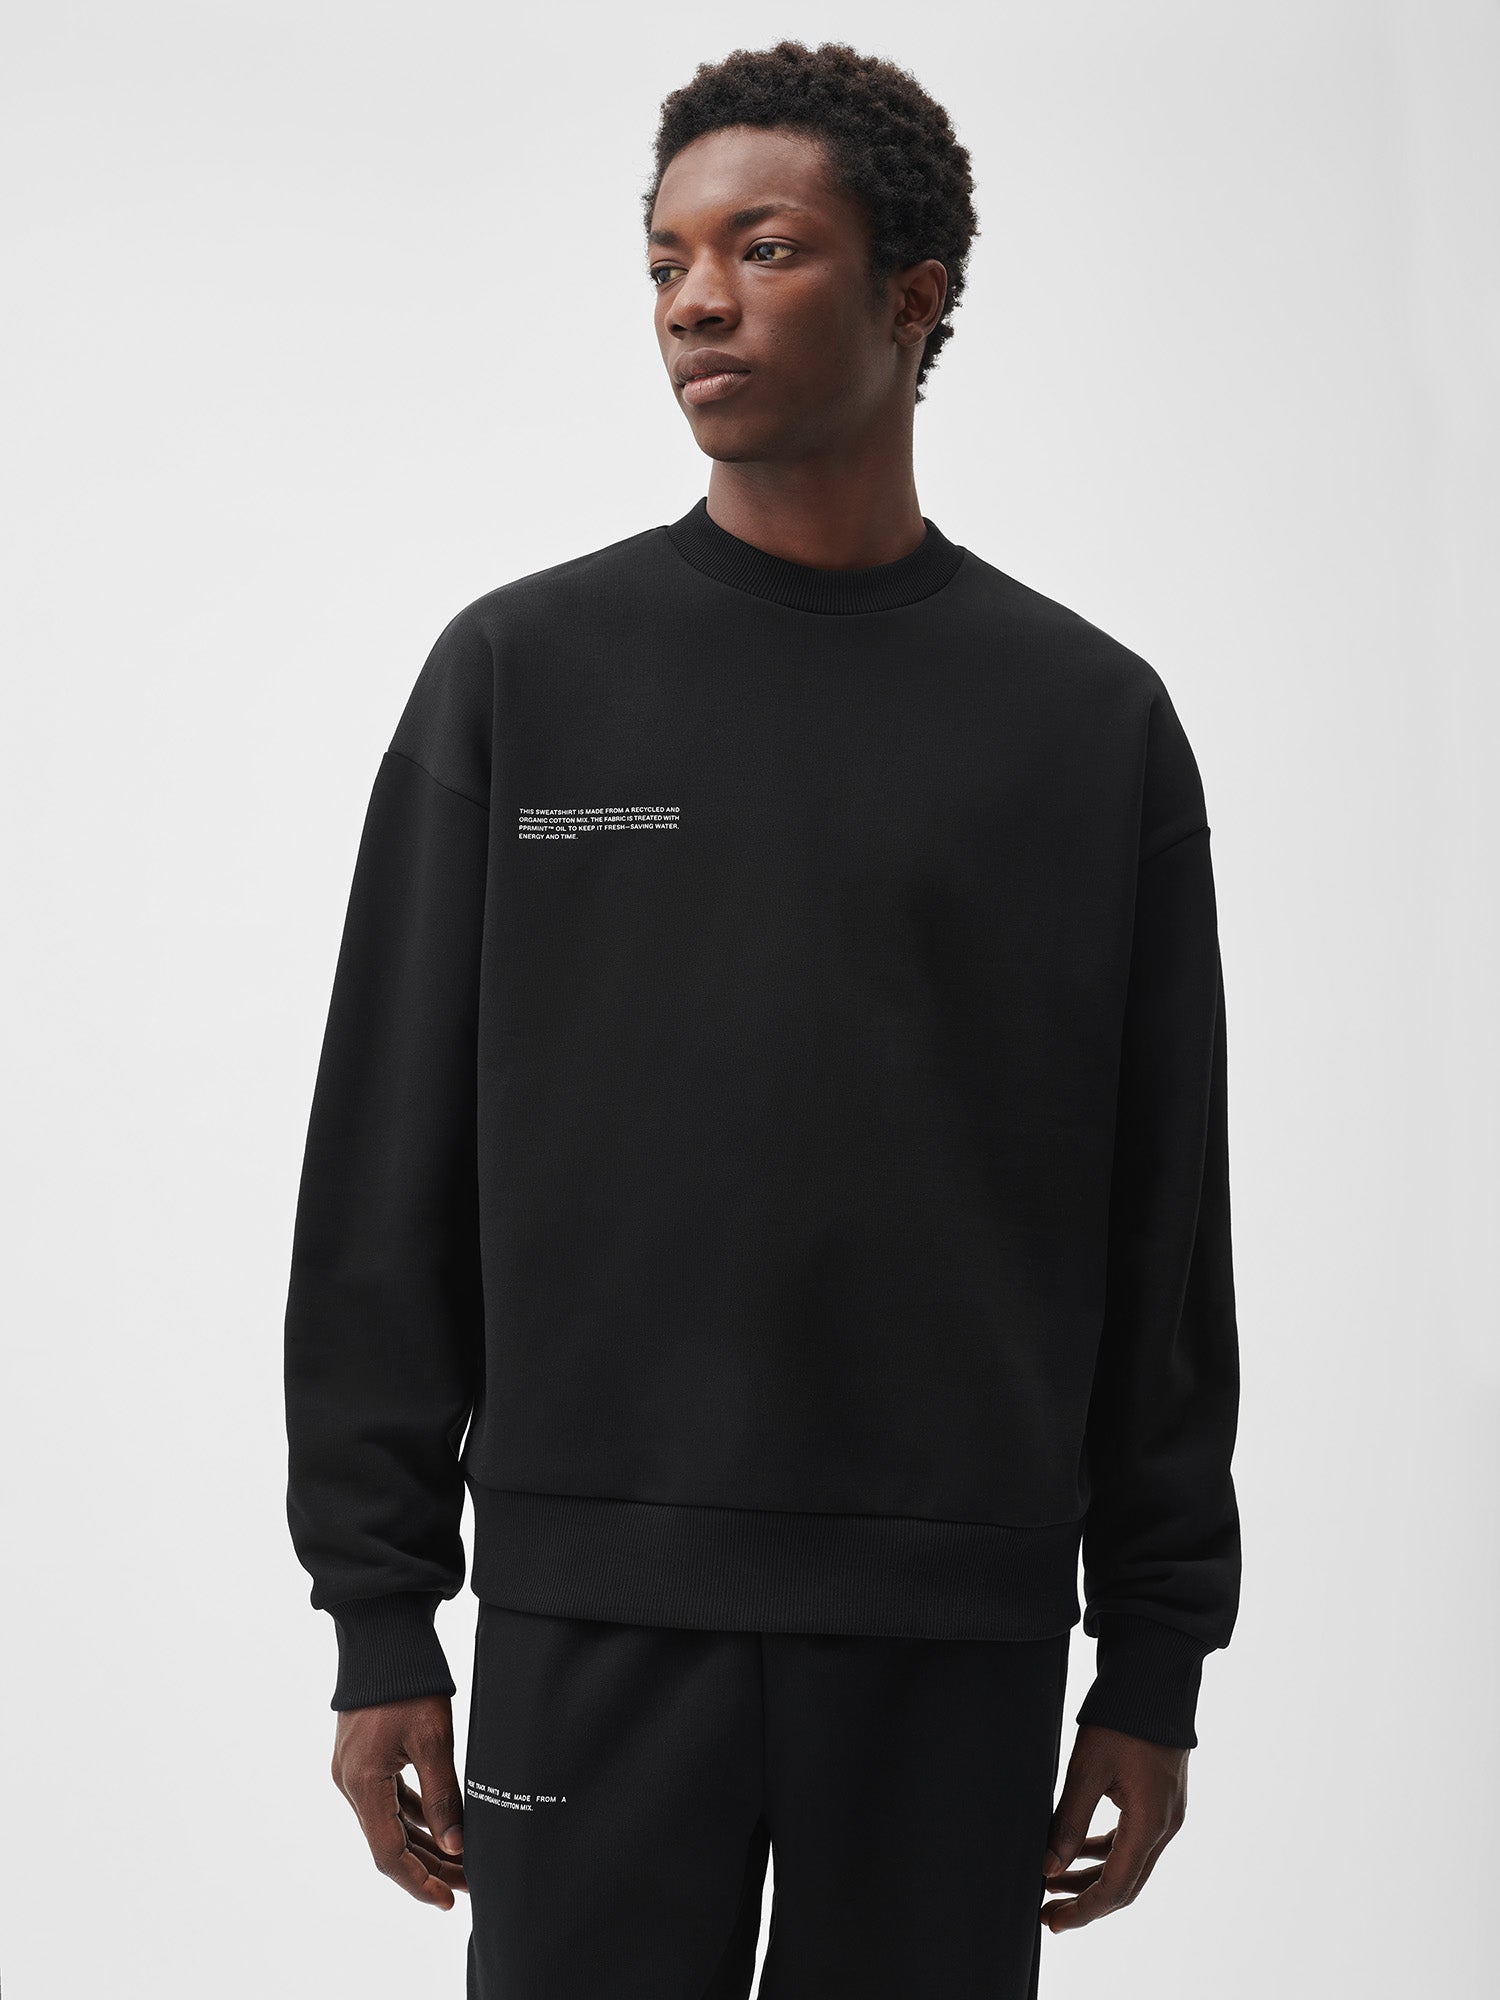 Signature-Sweatshirt-Black-Model-Male-1